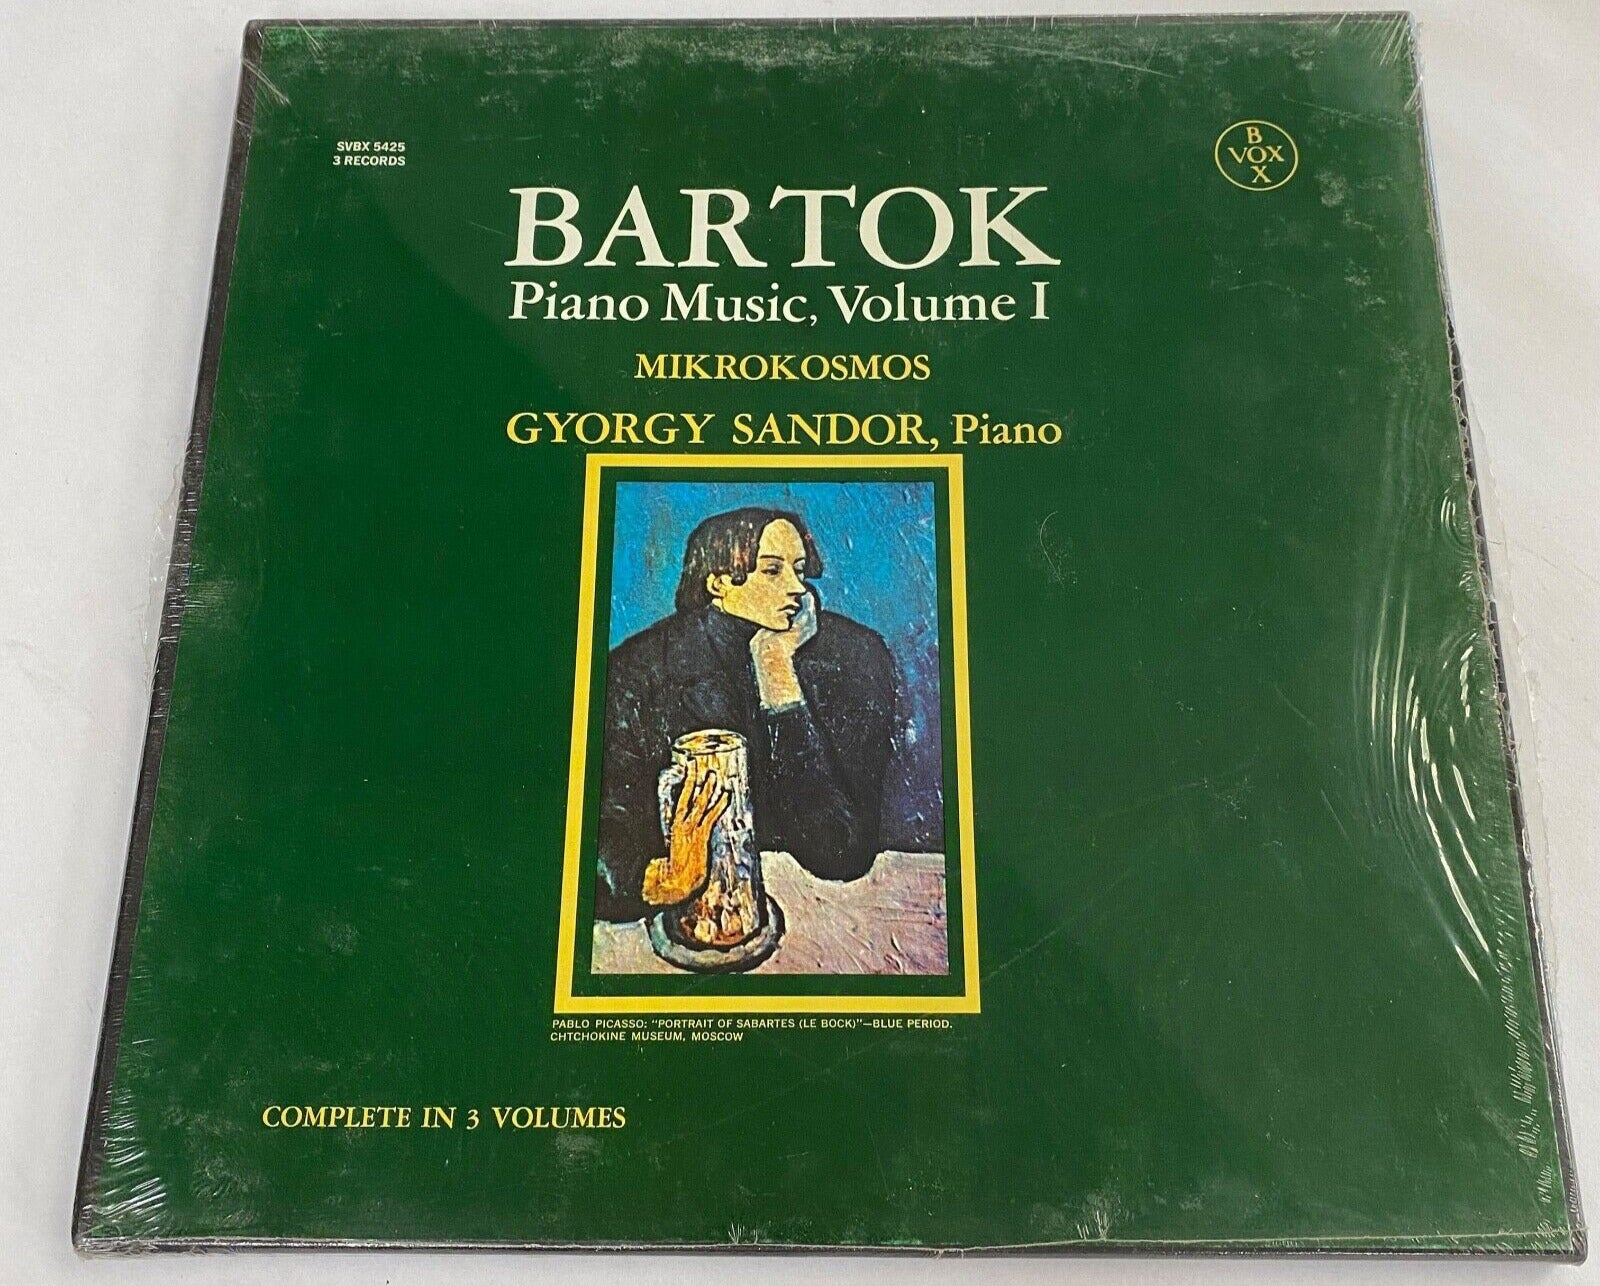 Bartok Piano Music Volume I Mikrokosmos GYORGY Sandor, Piano LP